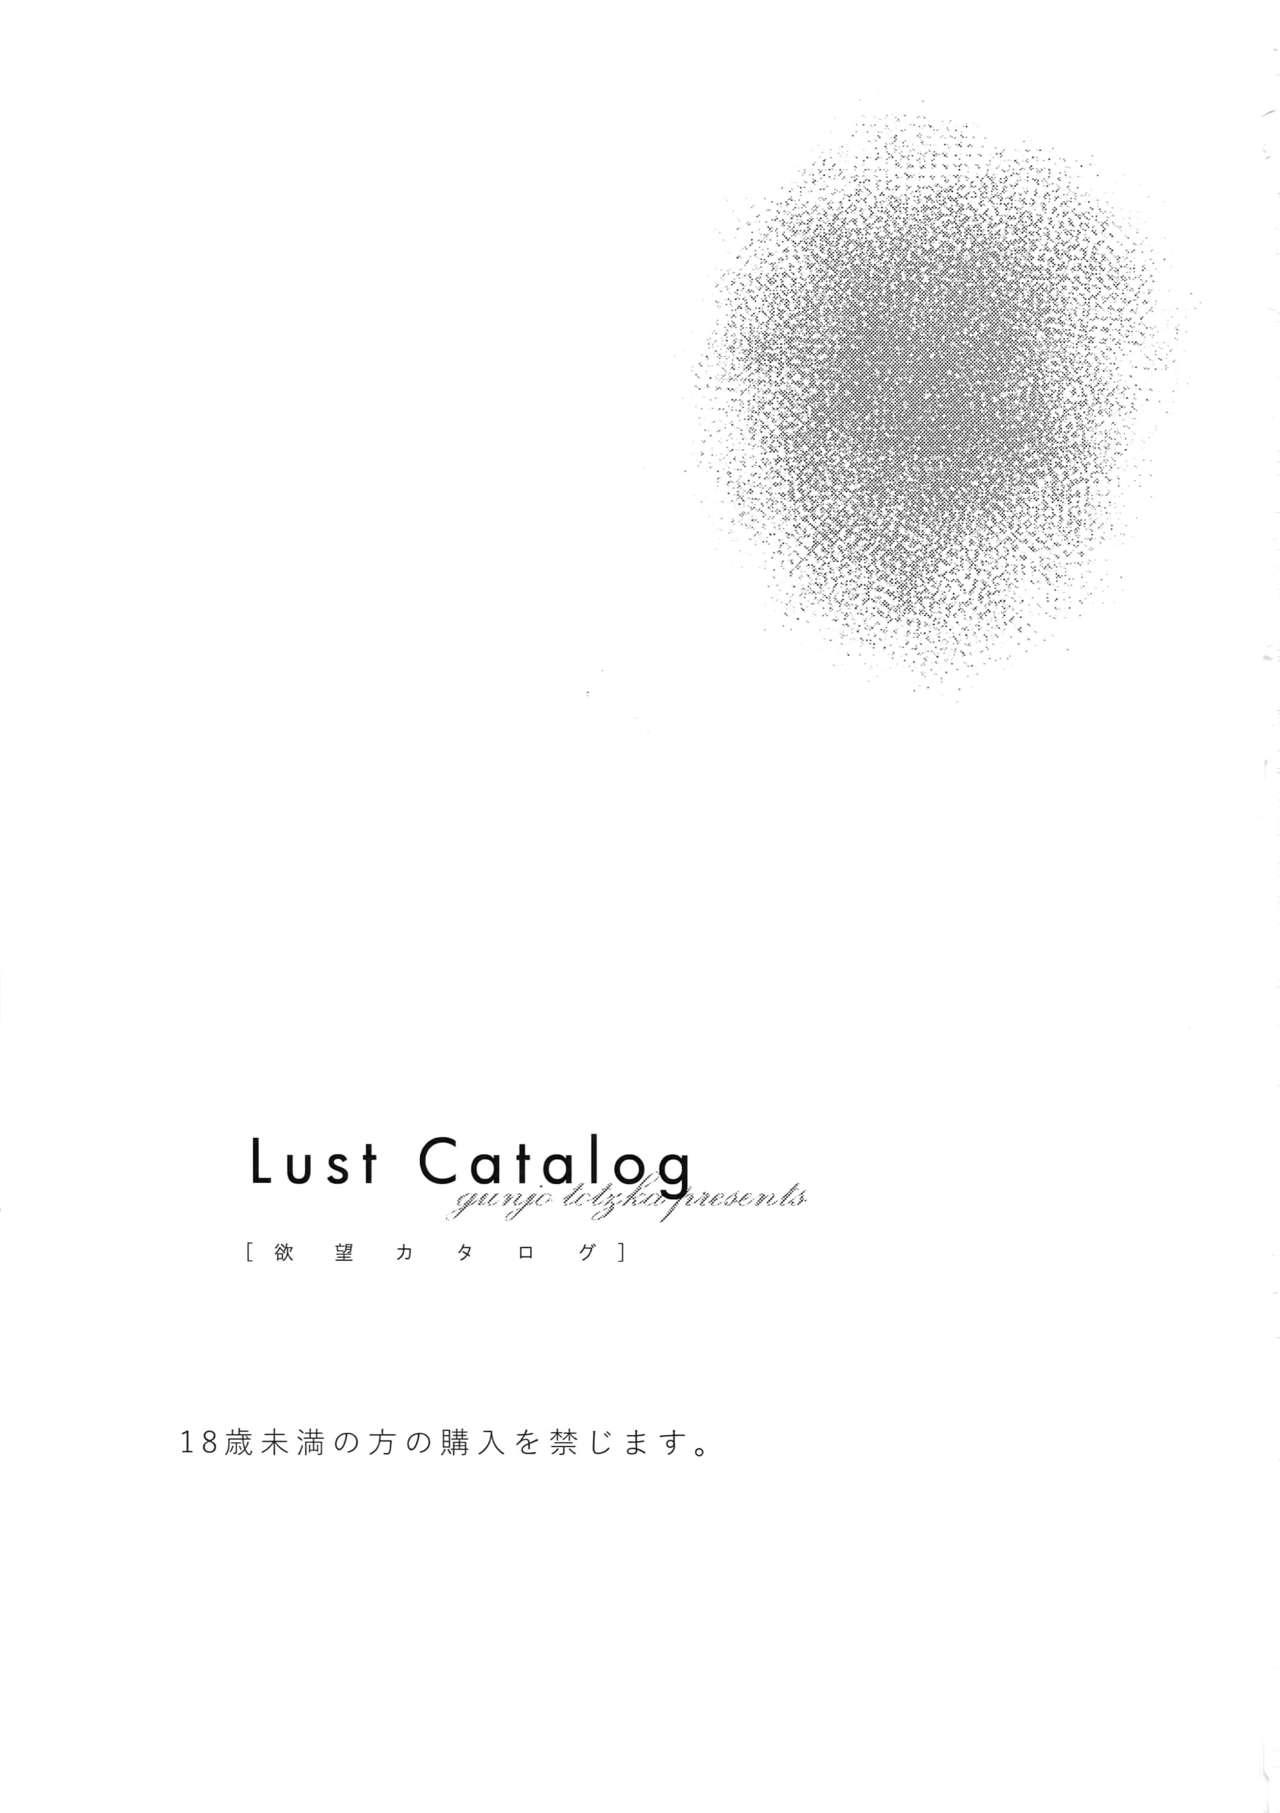 Fudendo Yokubou Catalog - Lust Catalog - Original Flexible - Picture 2